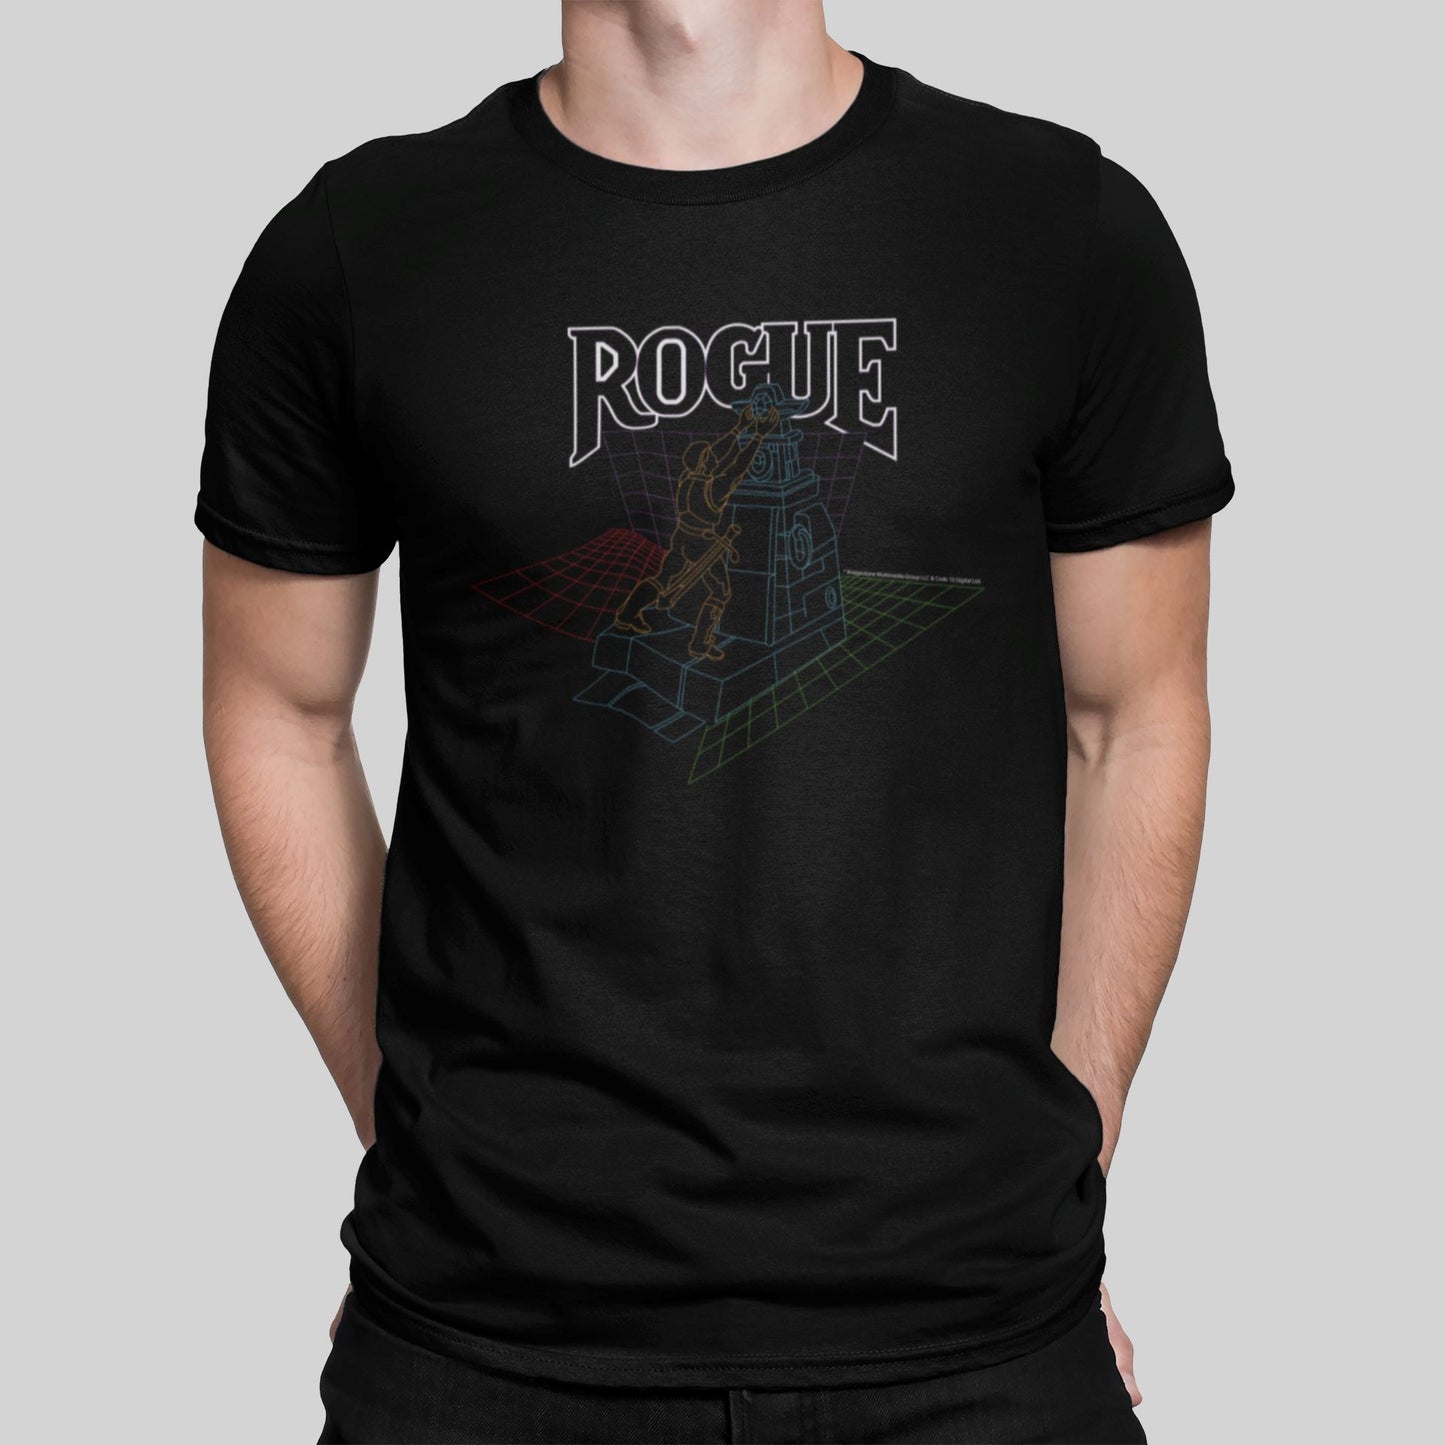 Rogue Retro Gaming T-Shirt T-Shirt Seven Squared Small 34-36" Black 